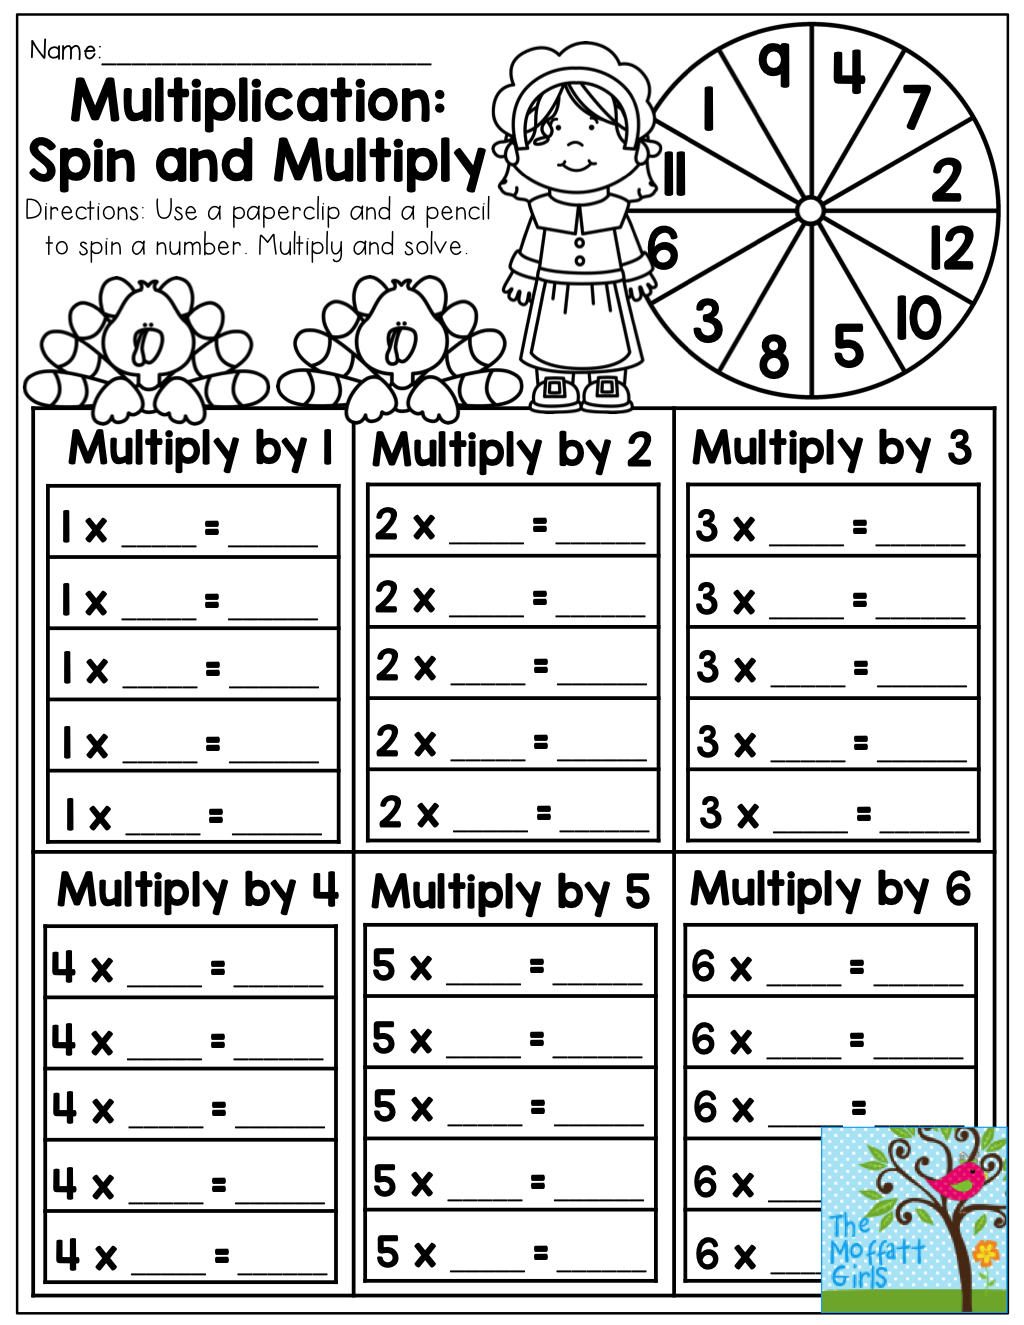 Worksheet Of Multiplication For Class 3rd